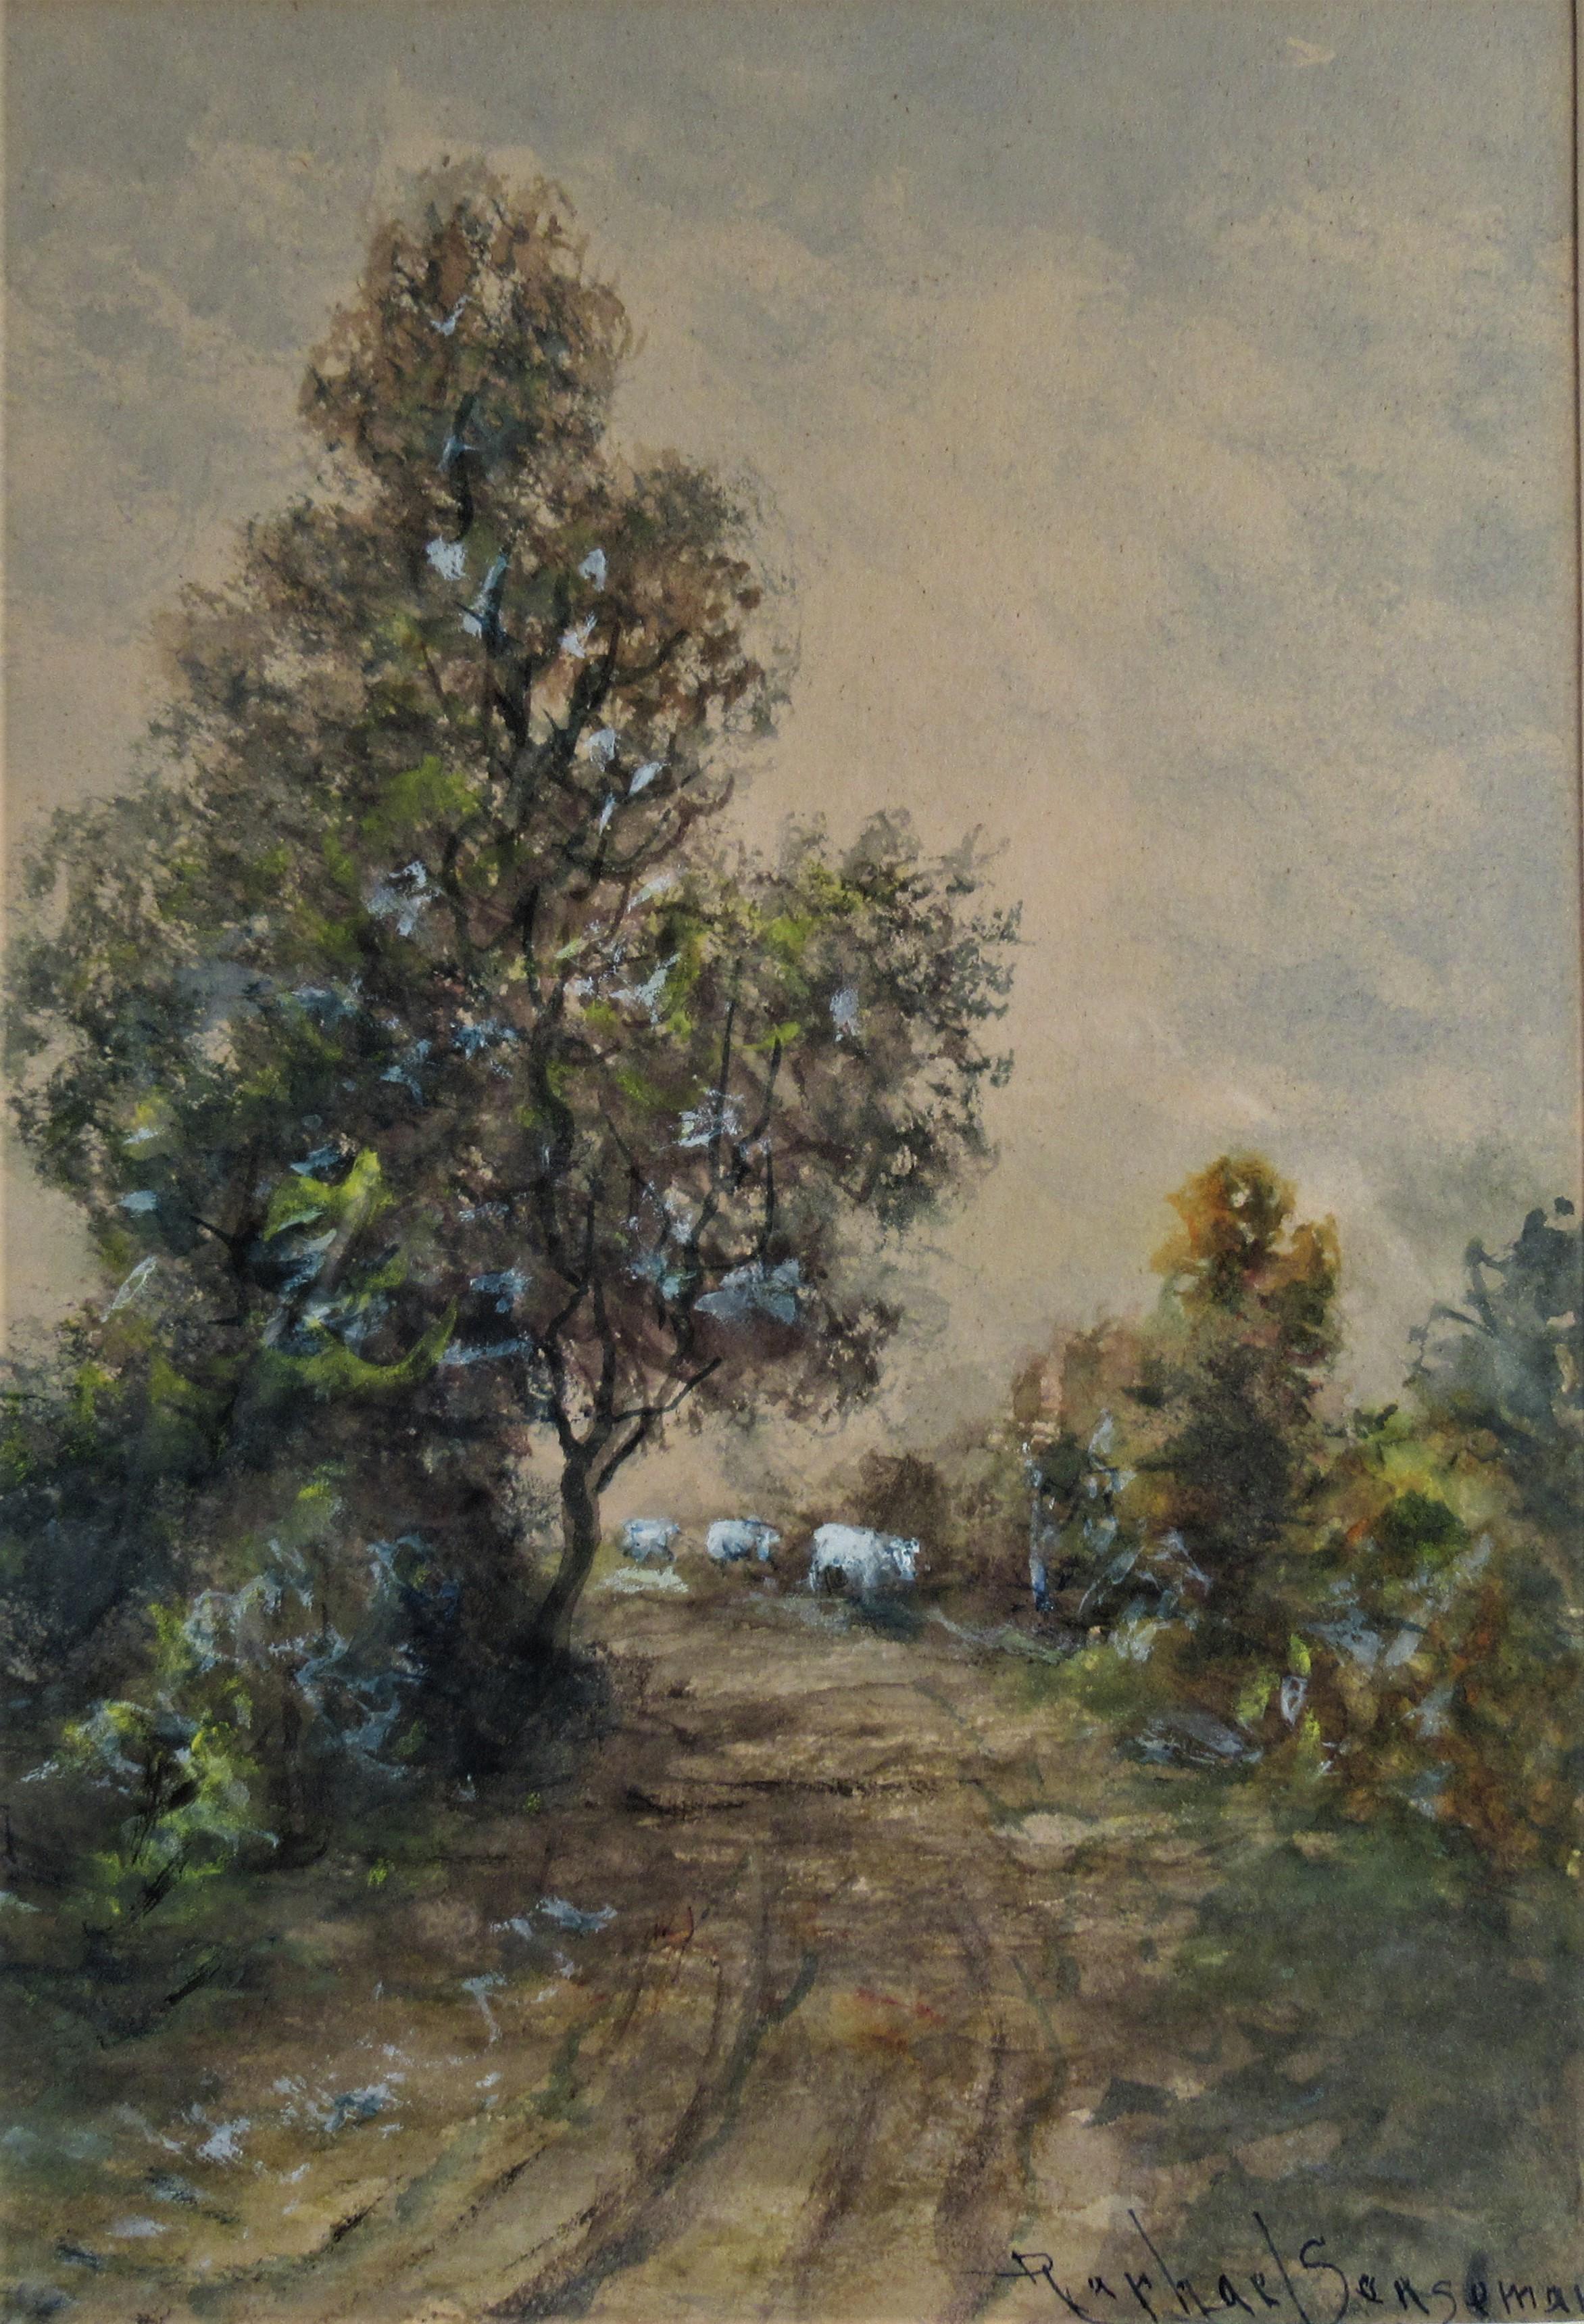 Landscape with Cattle - Art by Raphael Senseman